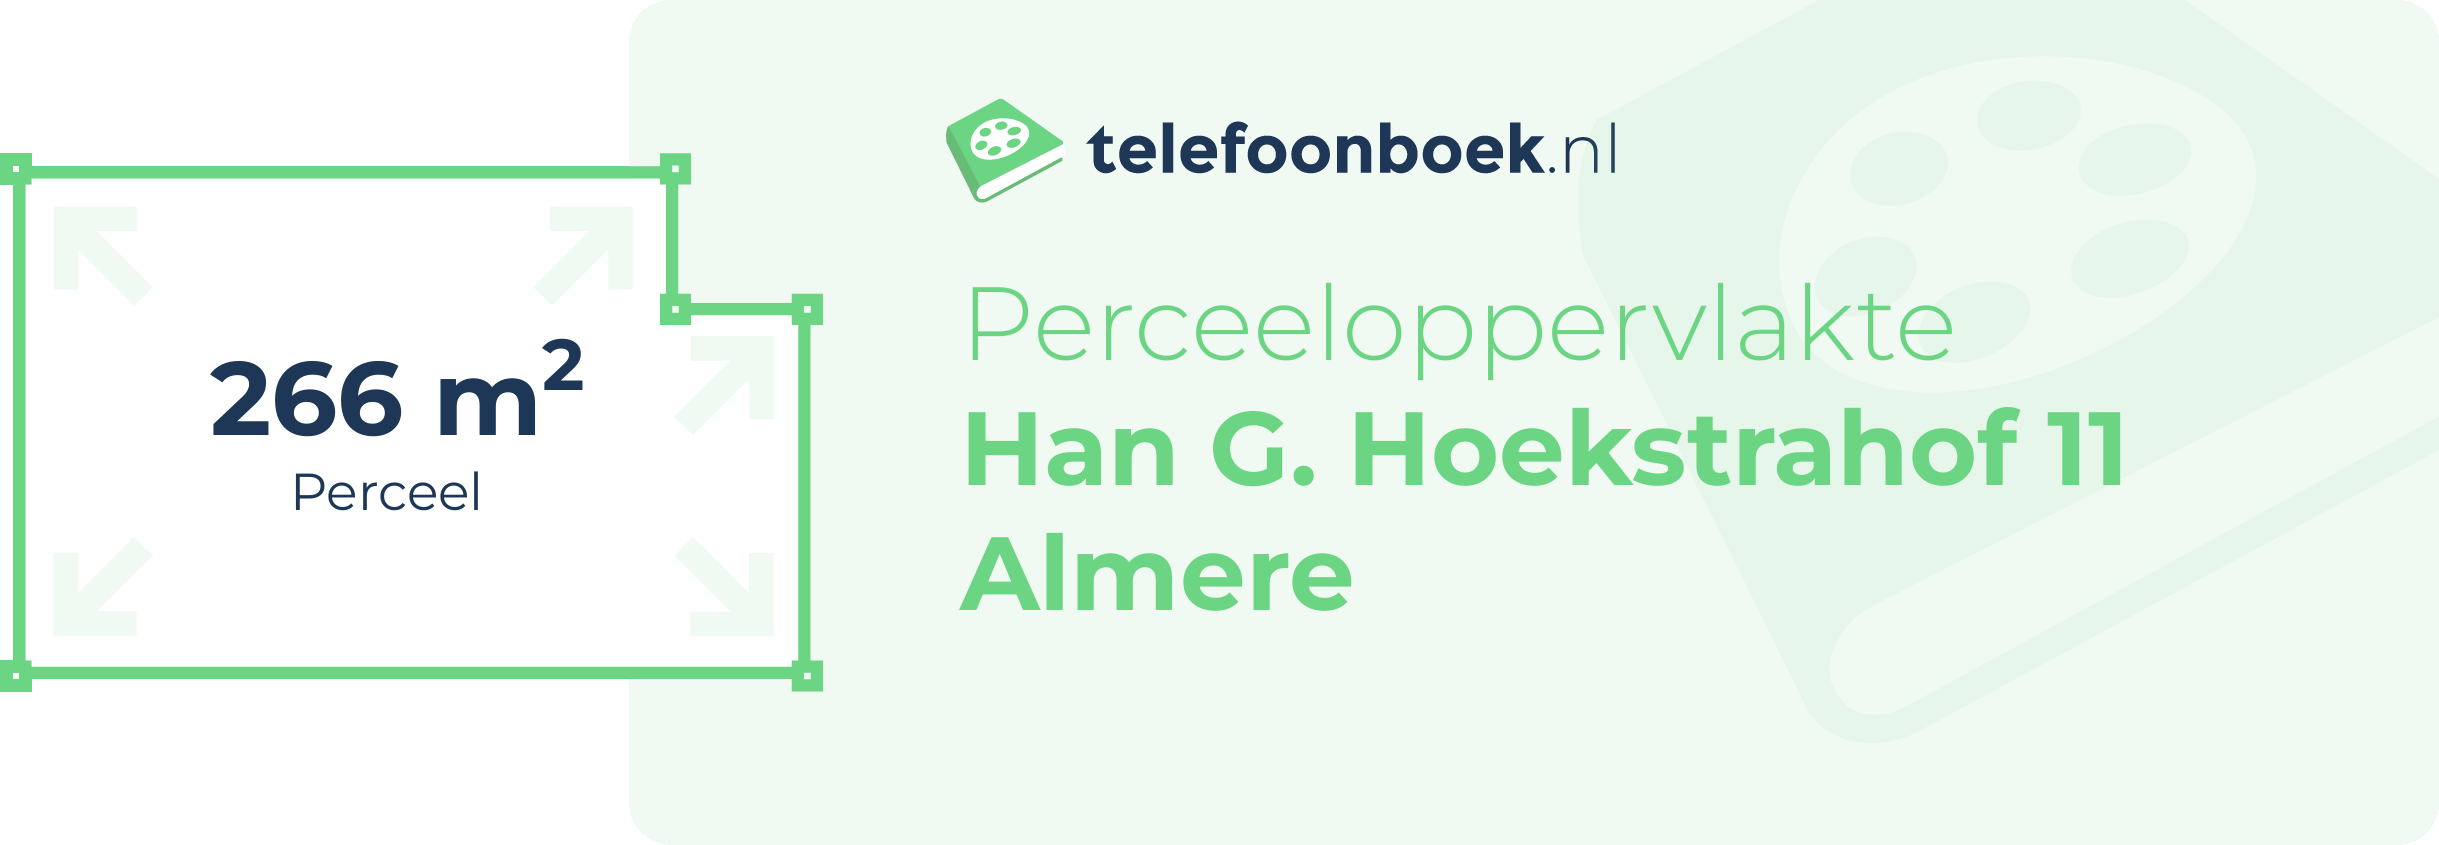 Perceeloppervlakte Han G. Hoekstrahof 11 Almere